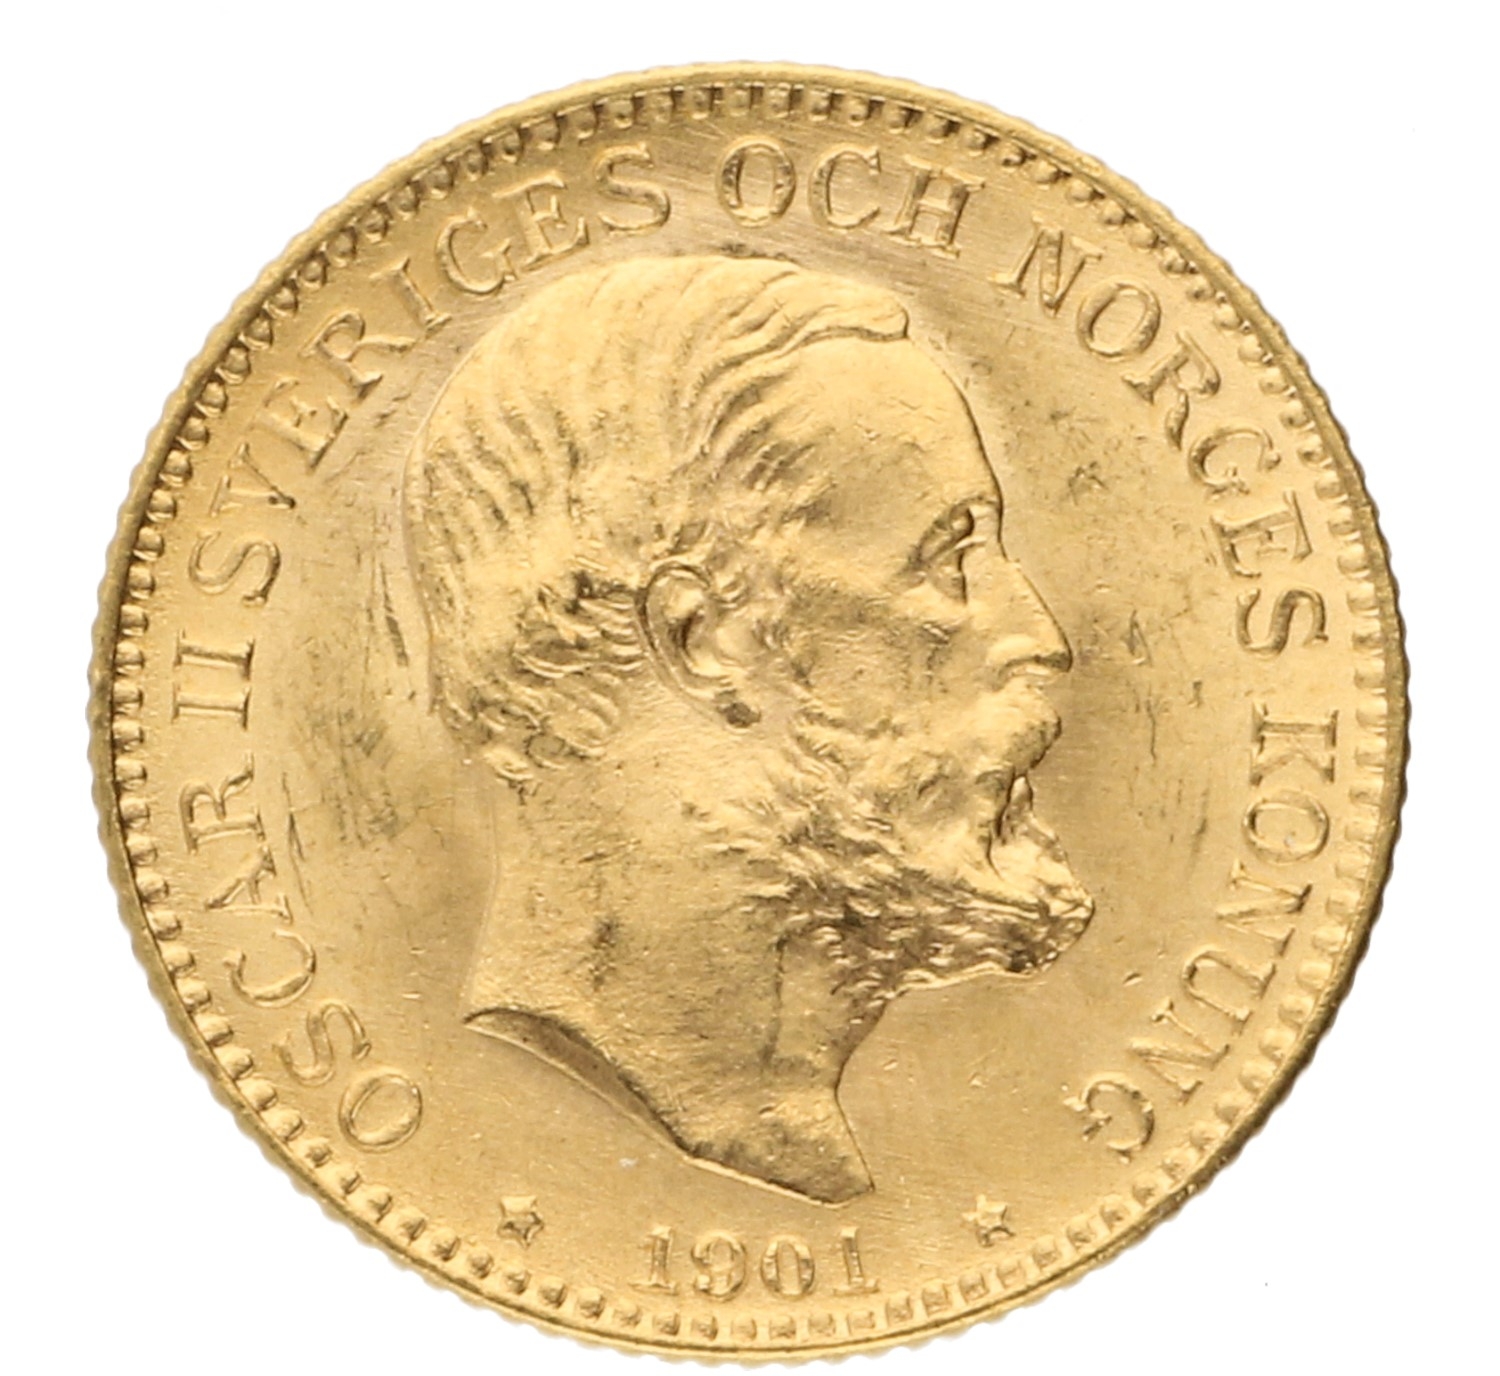 10 Kronor - Sweden - 1901